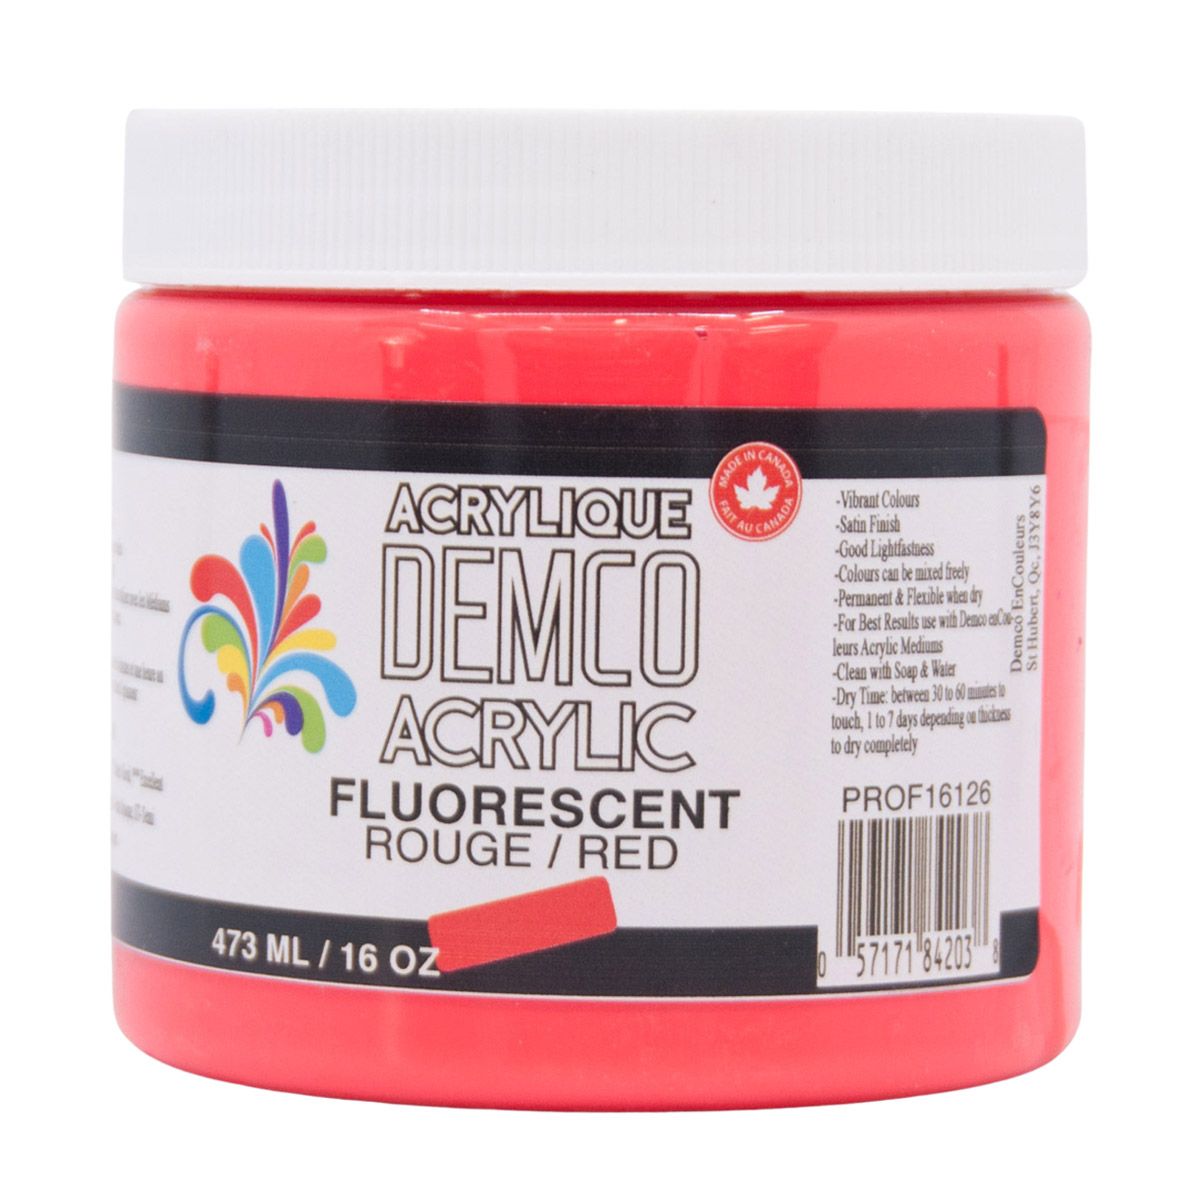 Demco Acrylic Fluorescent Red 473ml/16oz